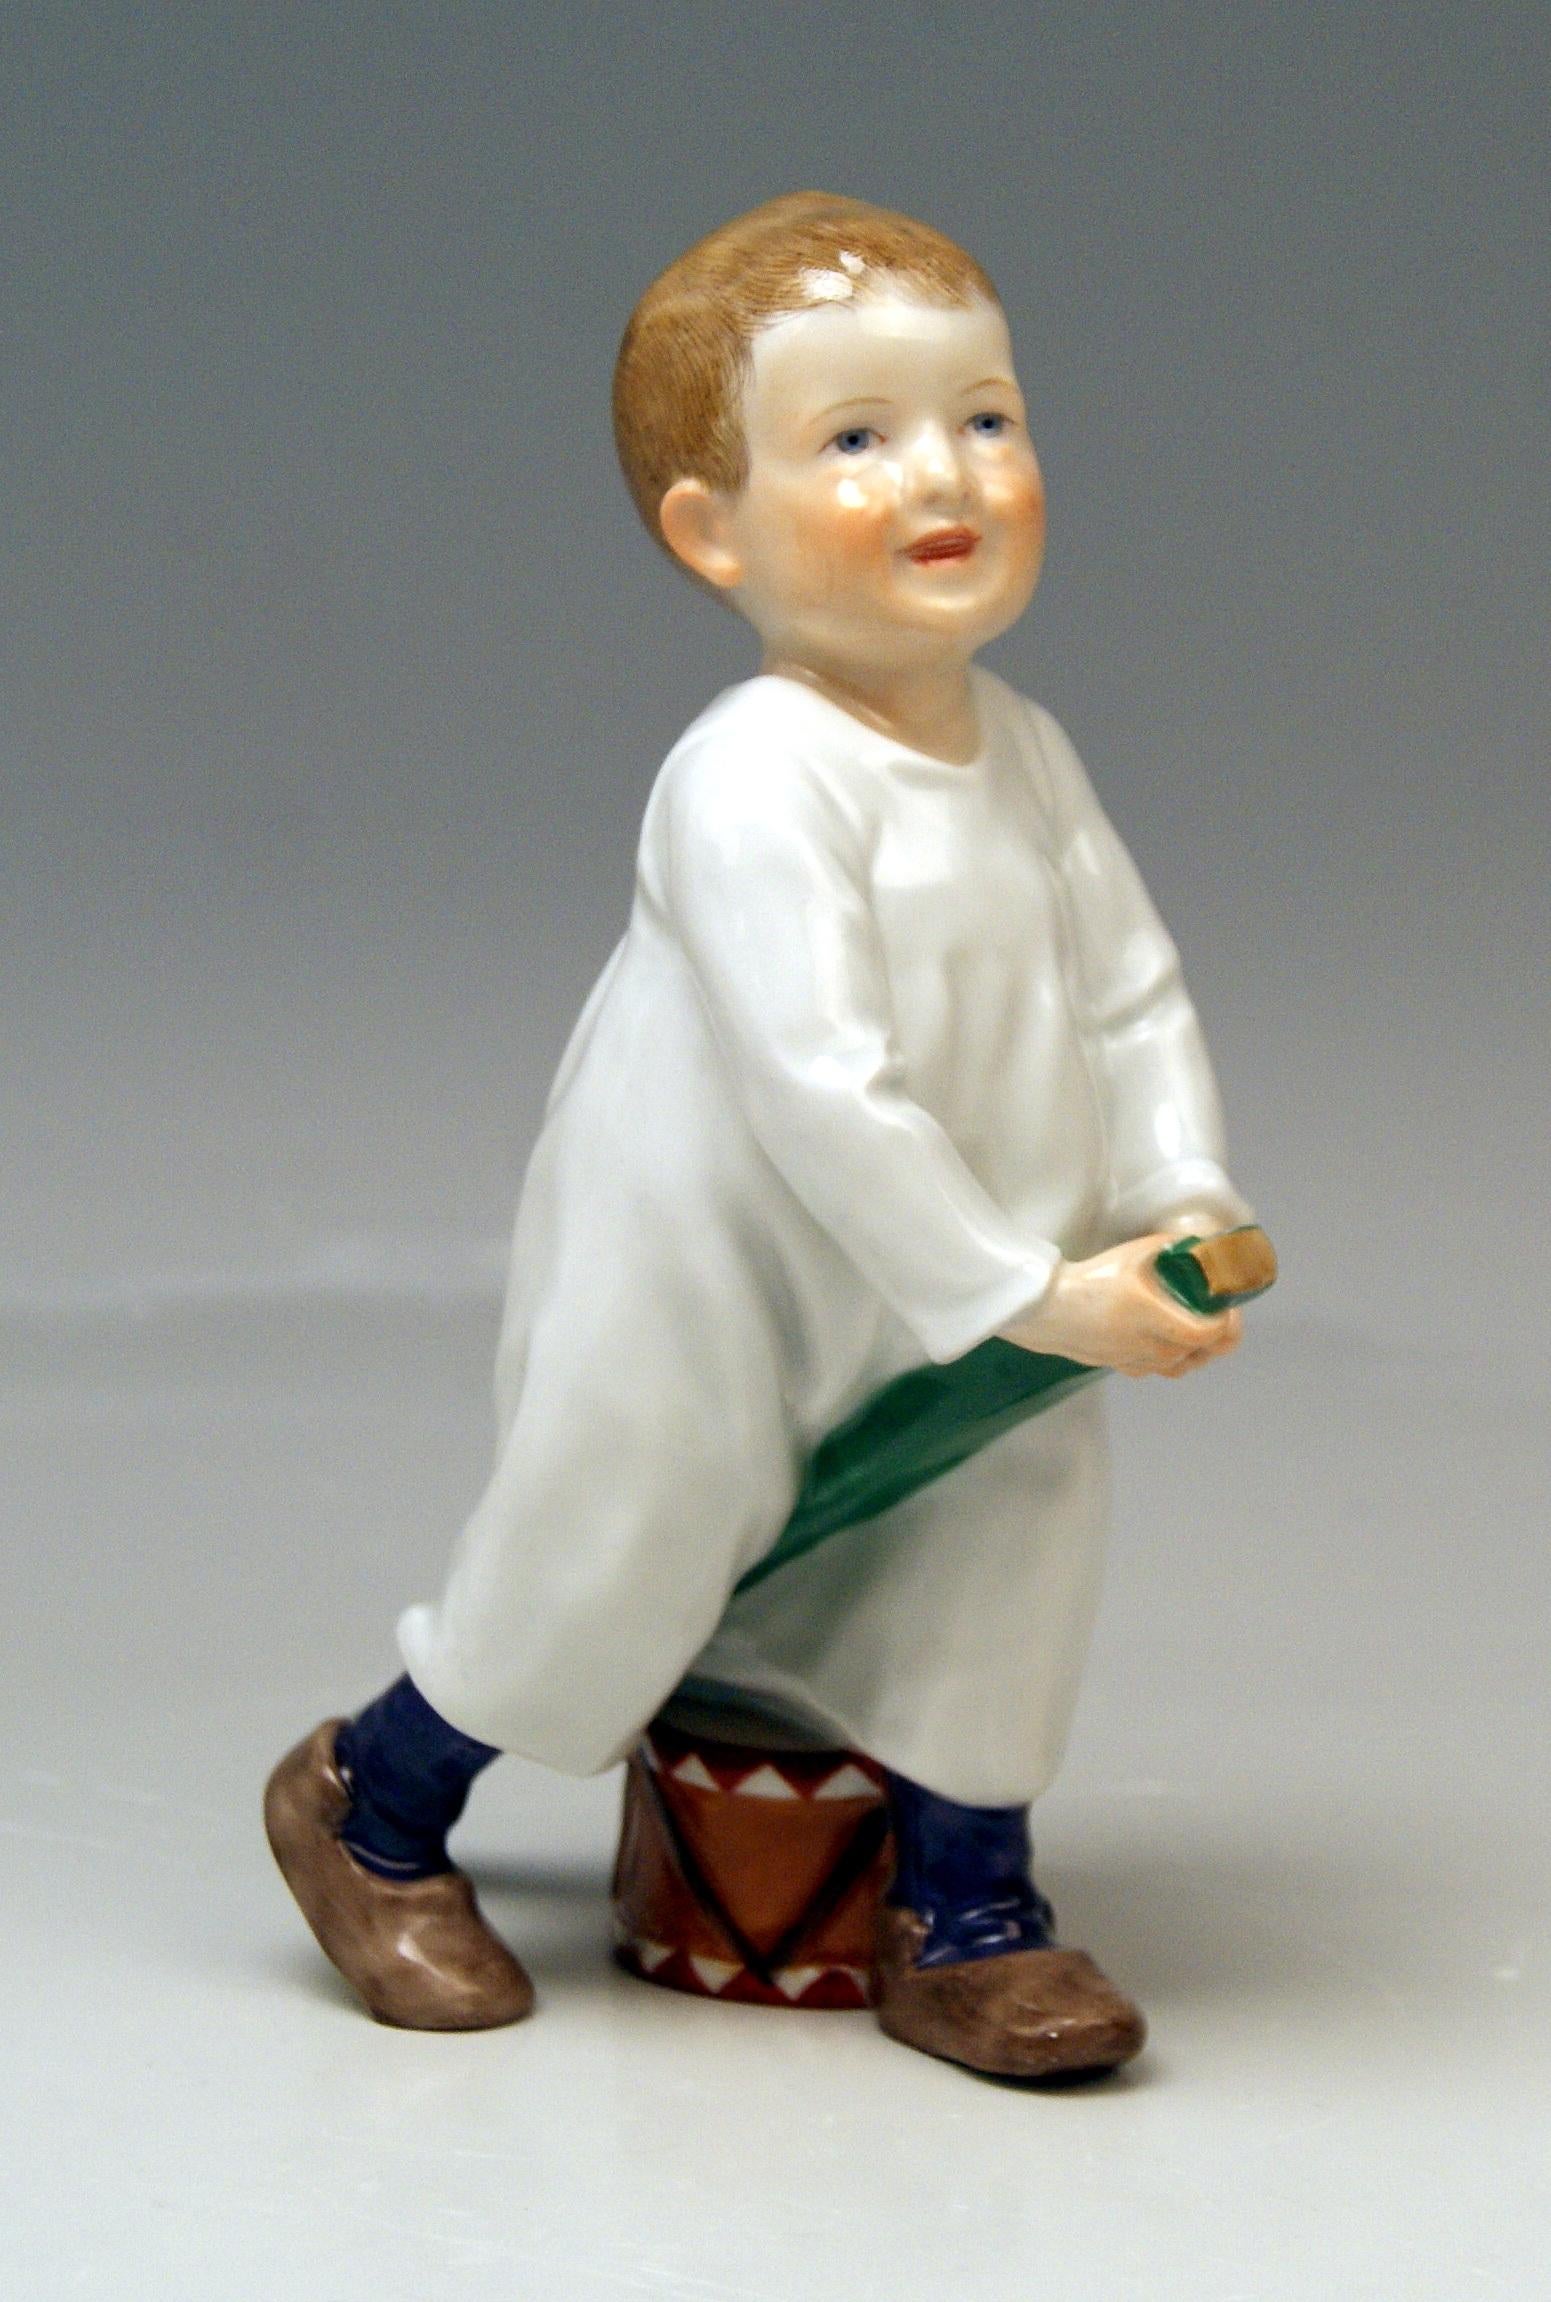 Meissen lovely Hentschel figurine: Baby boy riding on a cane
Model W 119.

Measures:
Height: 7.08 inches (= 18.0 cm)
Depth: 2.95 inches (= 7.5 cm)
Width: 4.13 inches (= 10.5 cm).

Manufactory: Meissen
Hallmarked: Blue Meissen Sword Mark